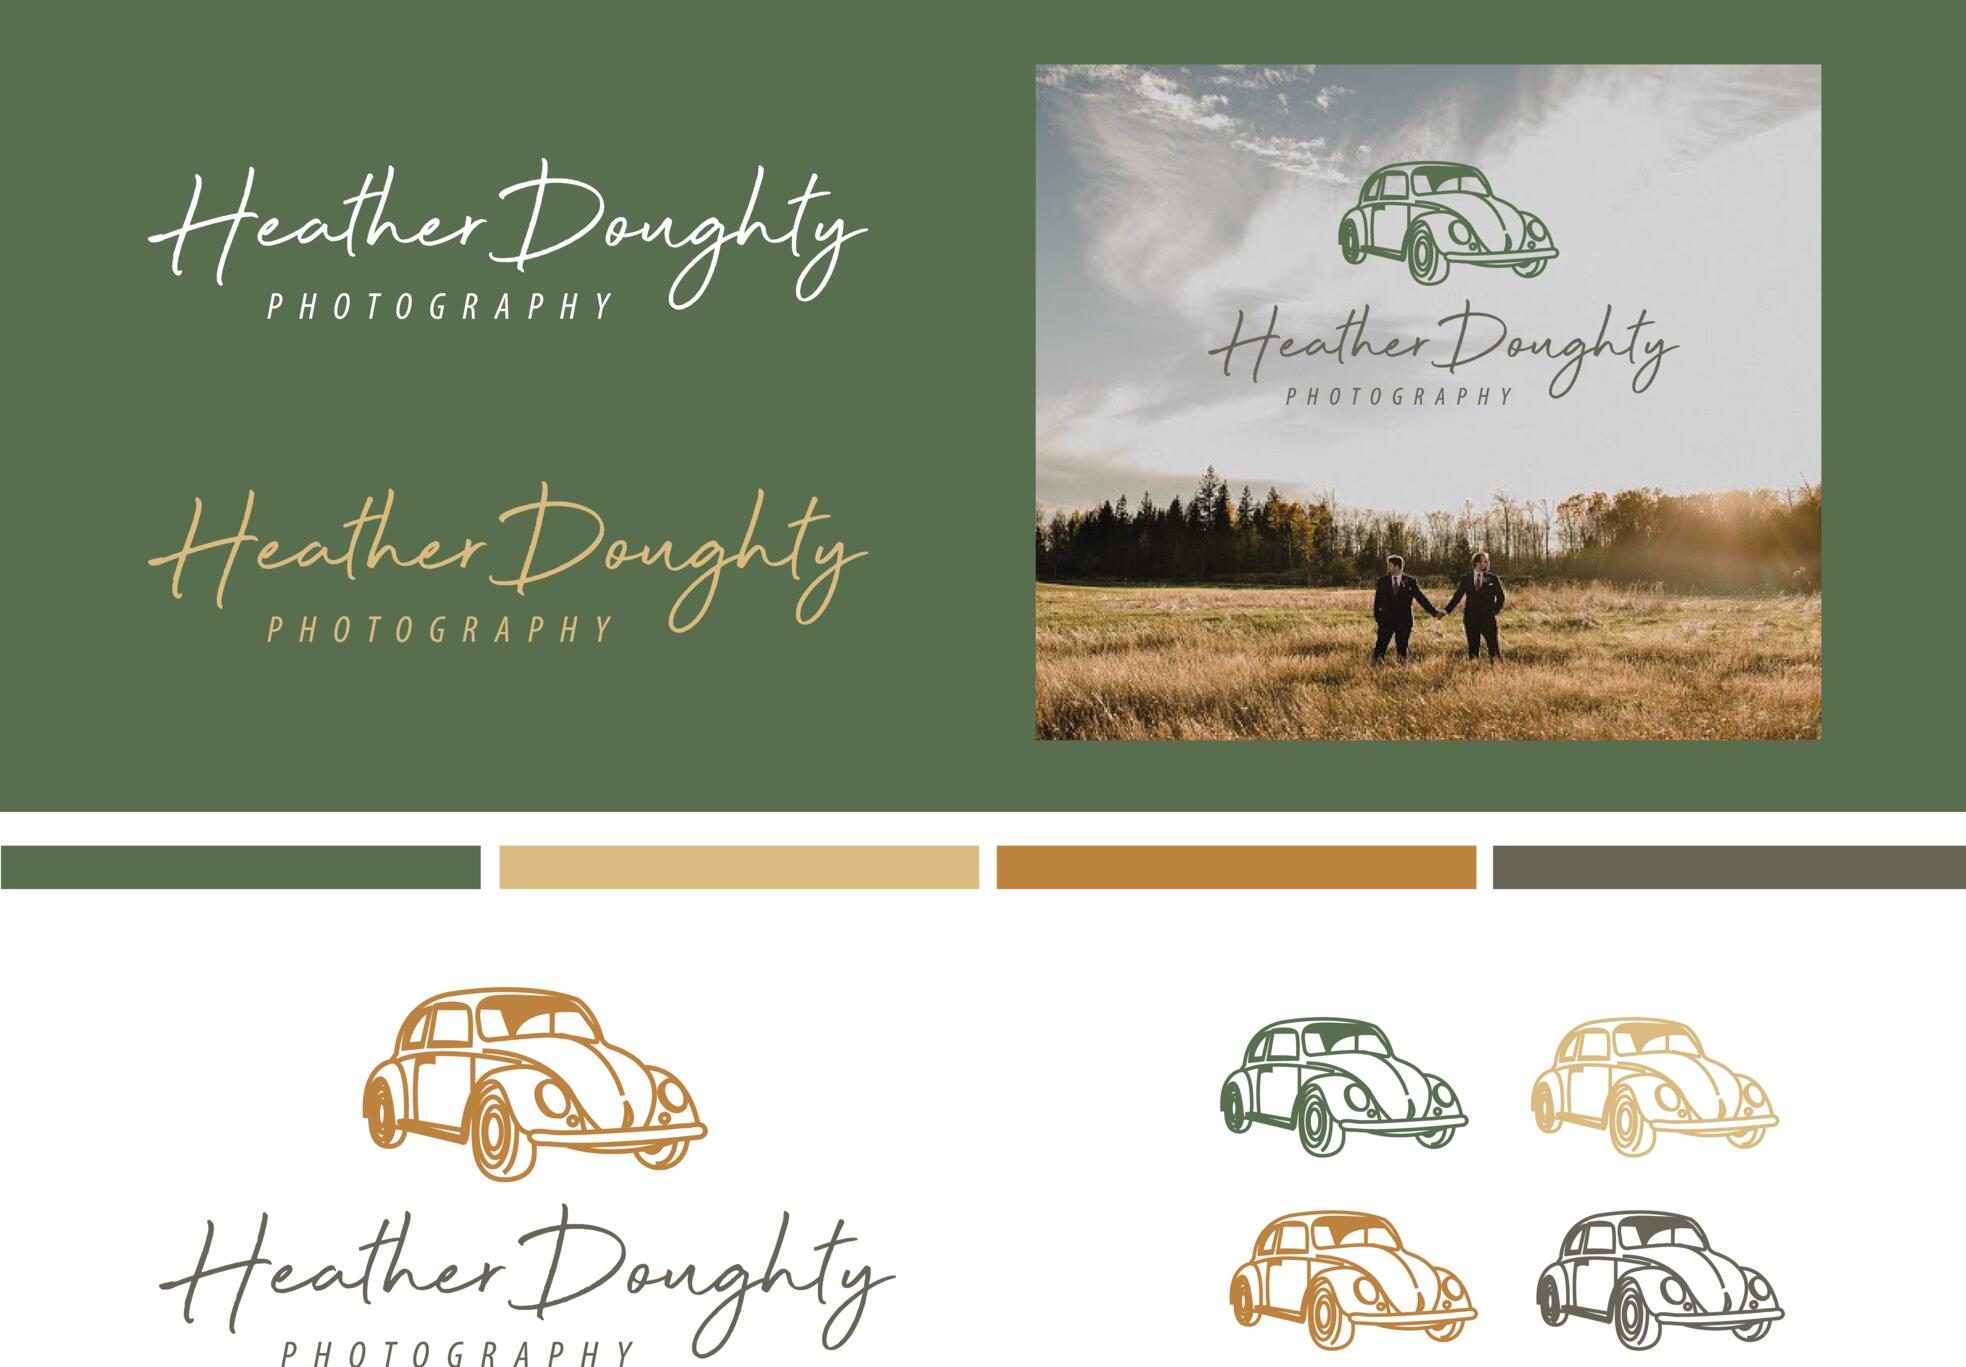 Heather Doughty branding